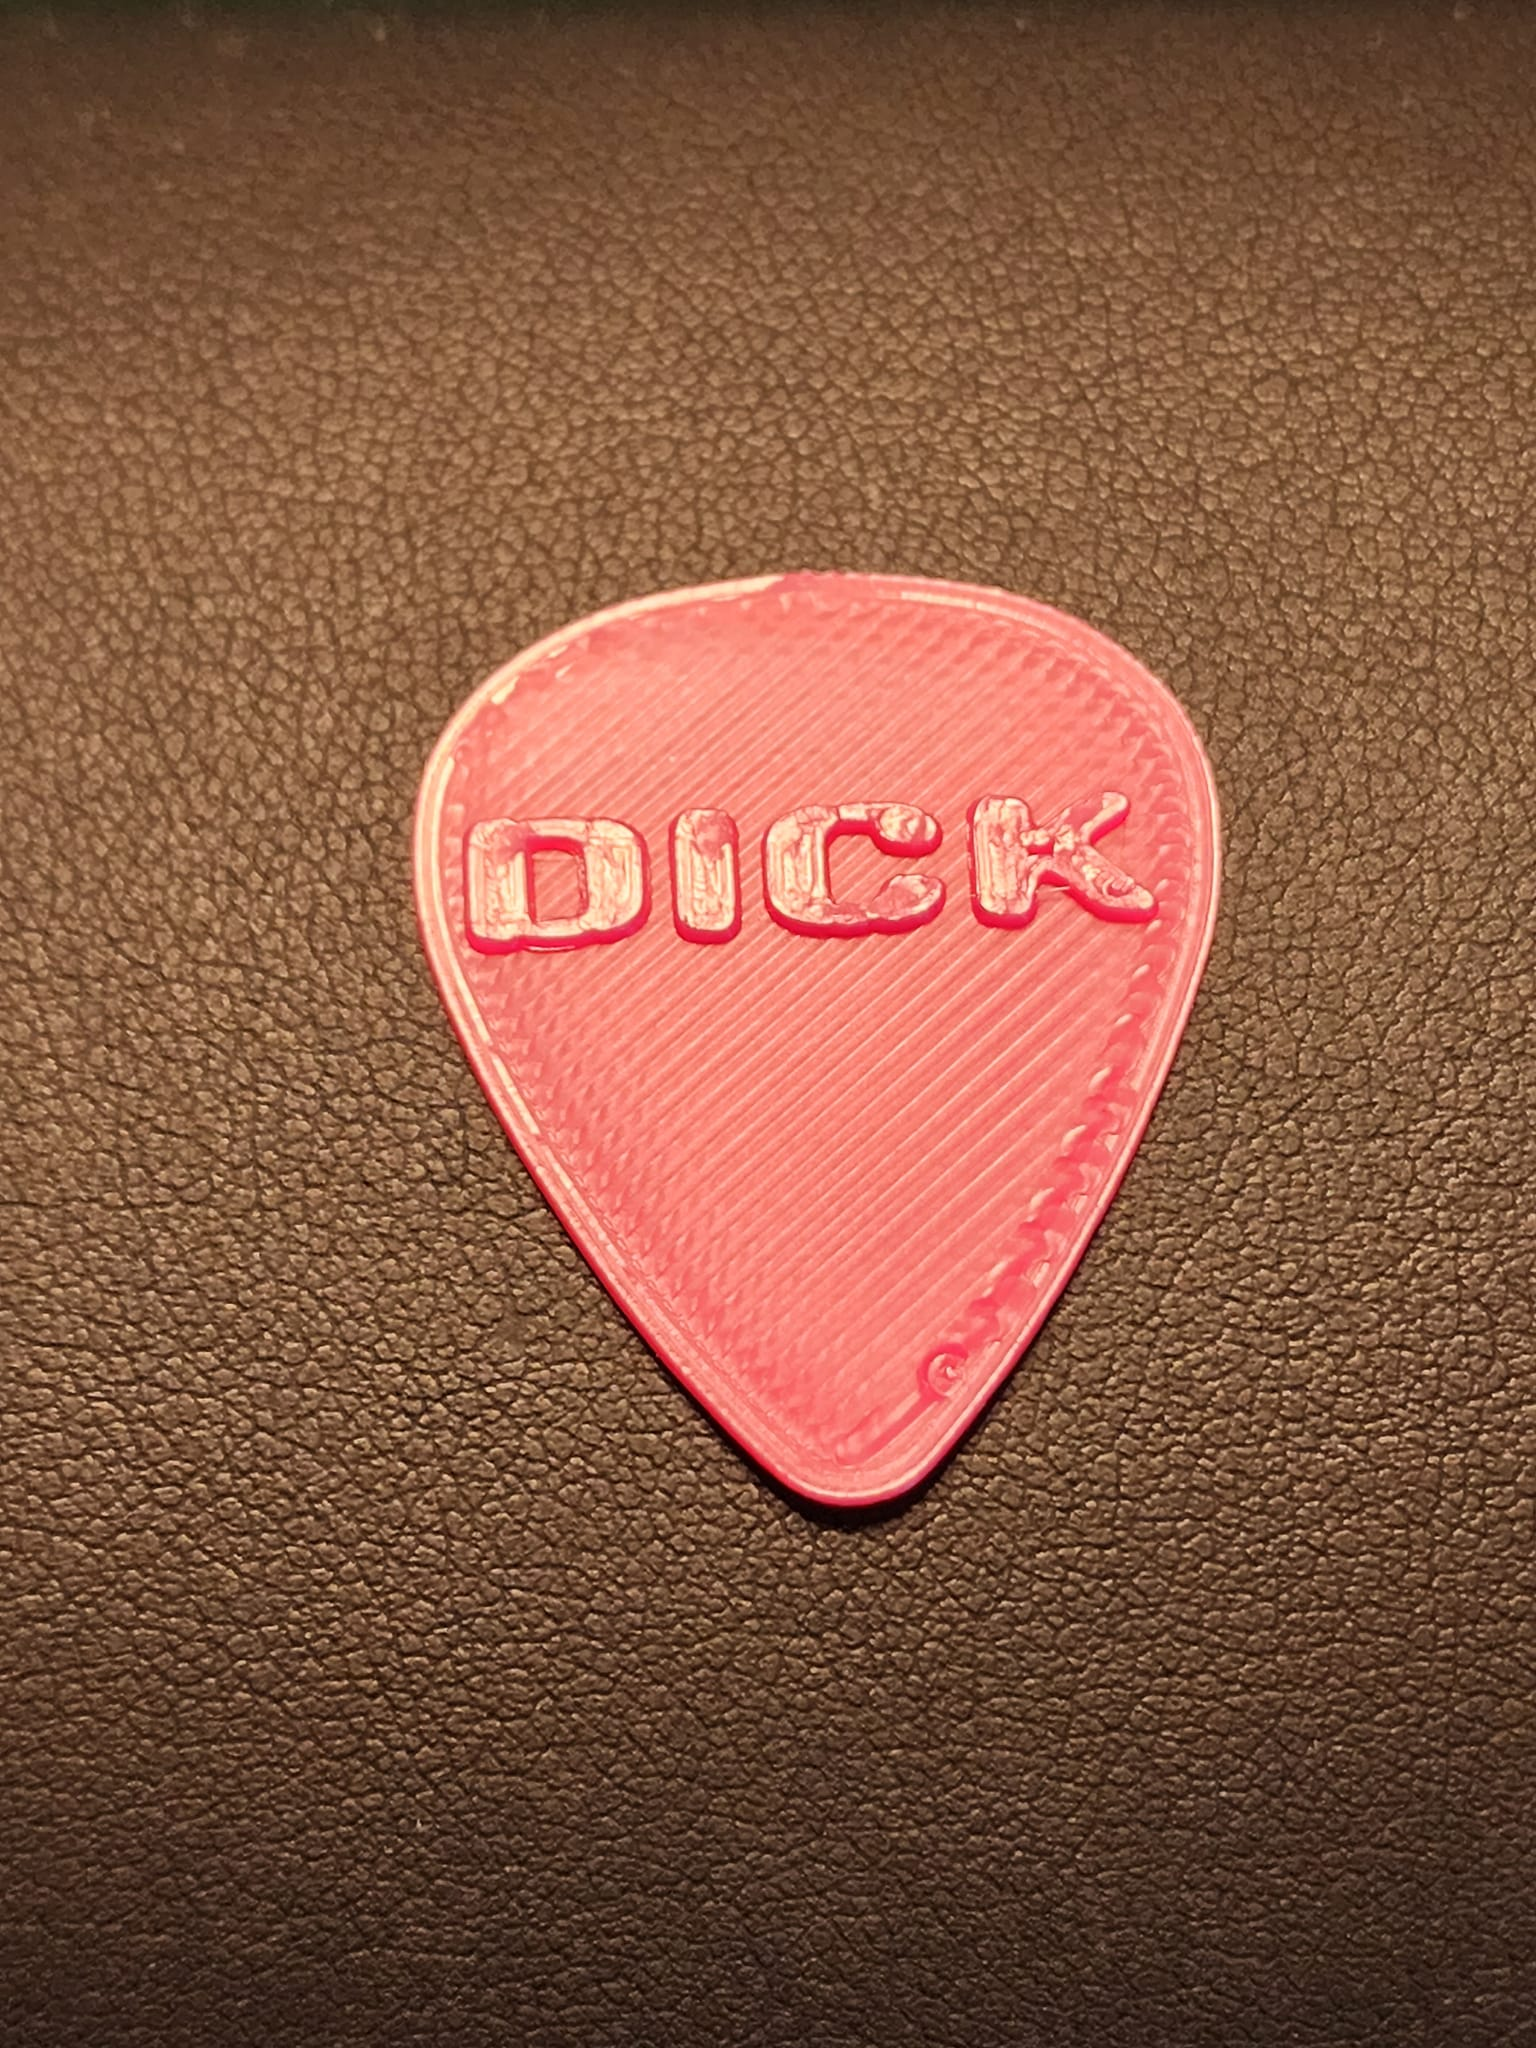 Dick Pick